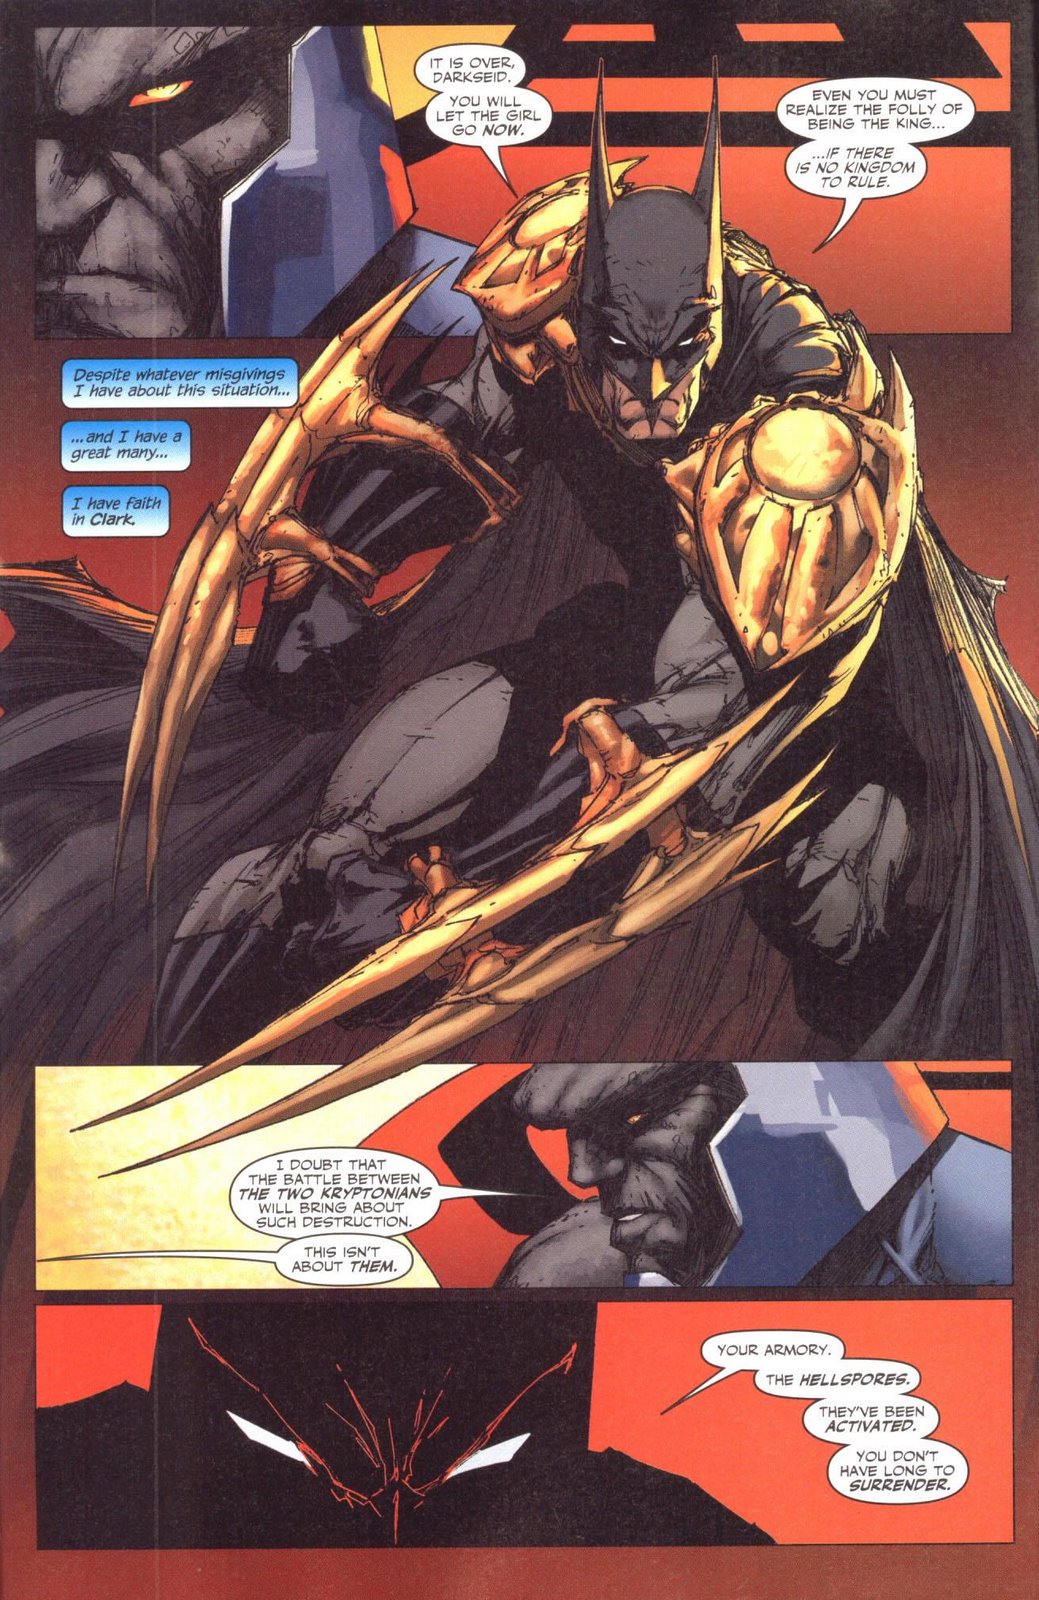 [Superman+&+Batman+#12+-+Page+9.jpg]